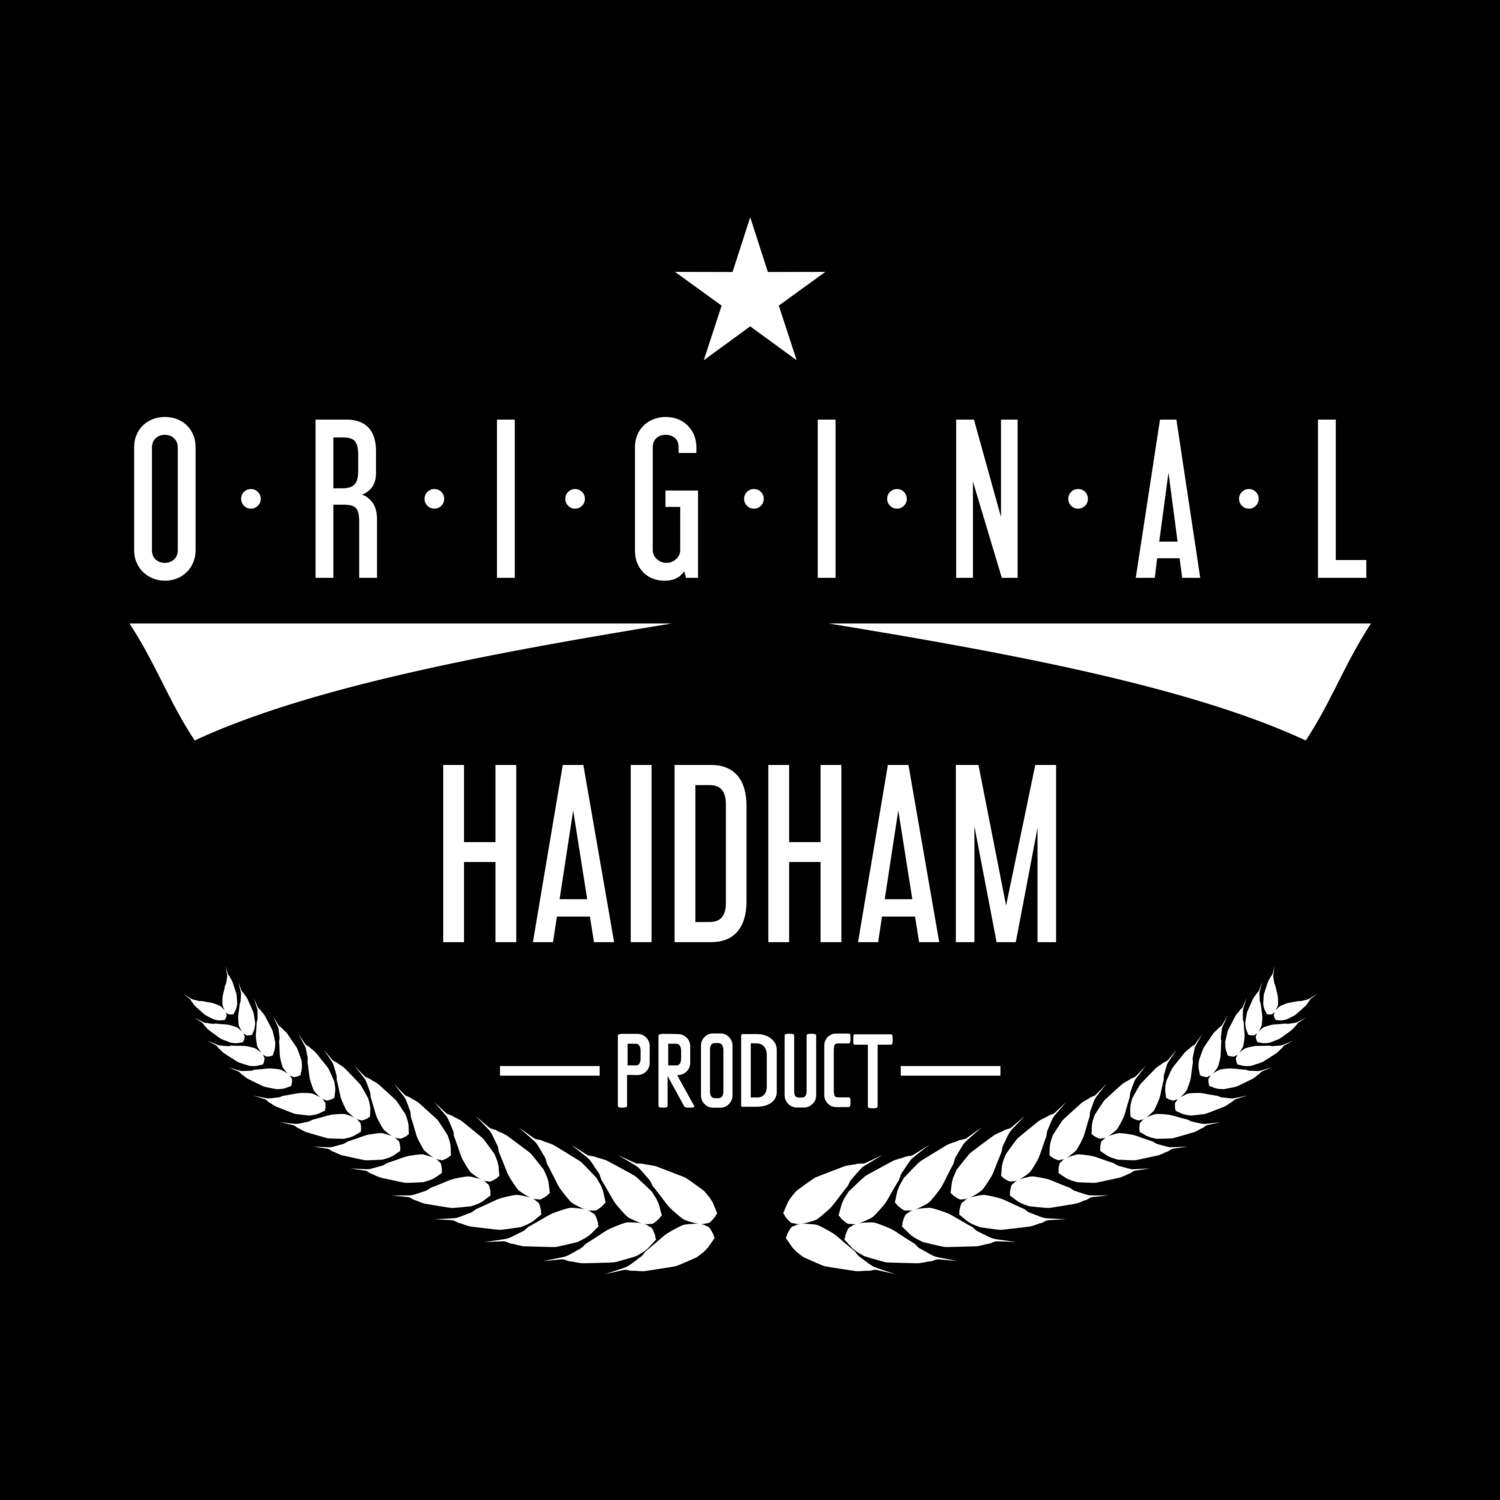 Haidham T-Shirt »Original Product«